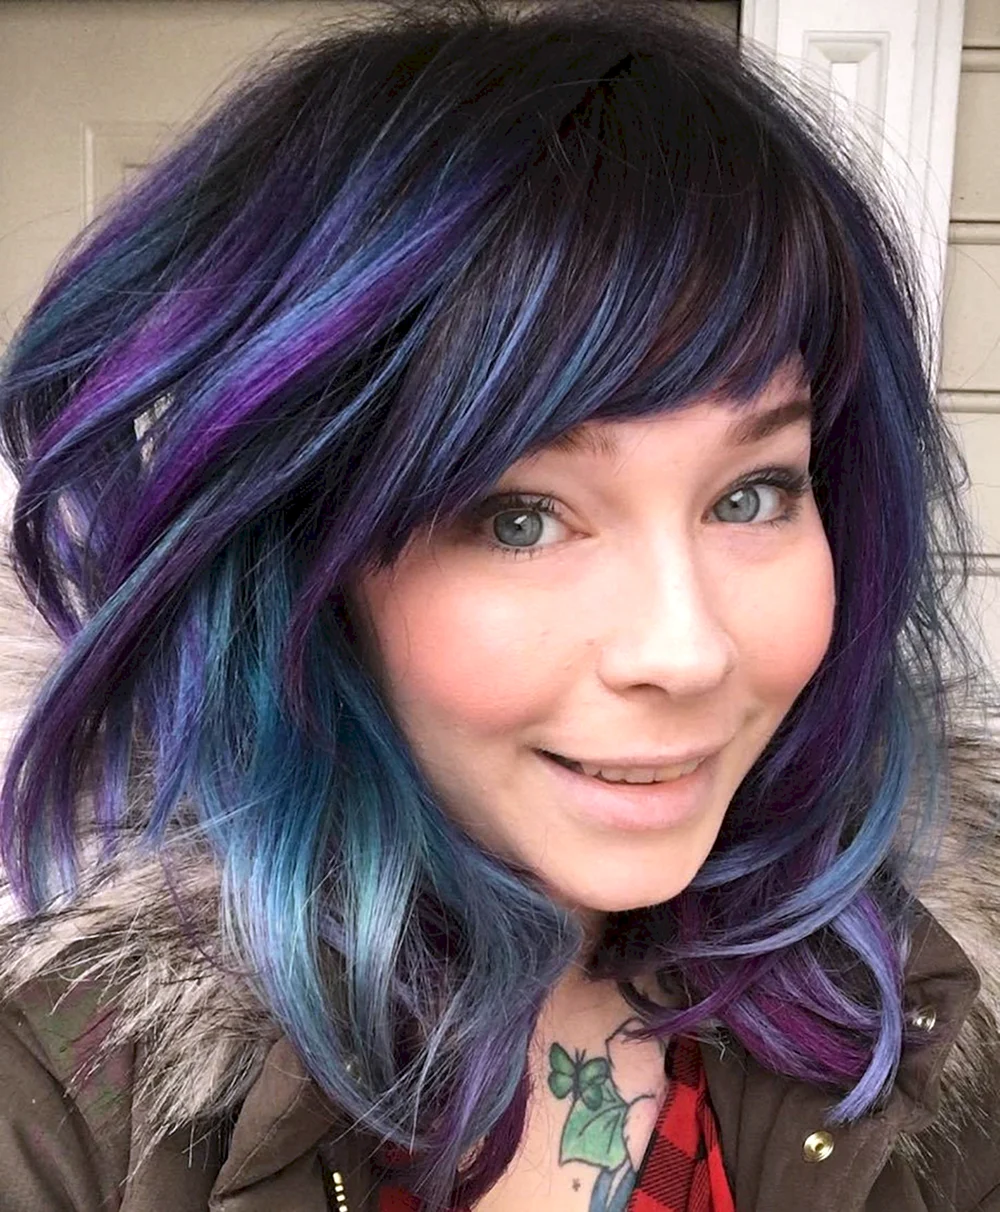 Blue hair with Bangs